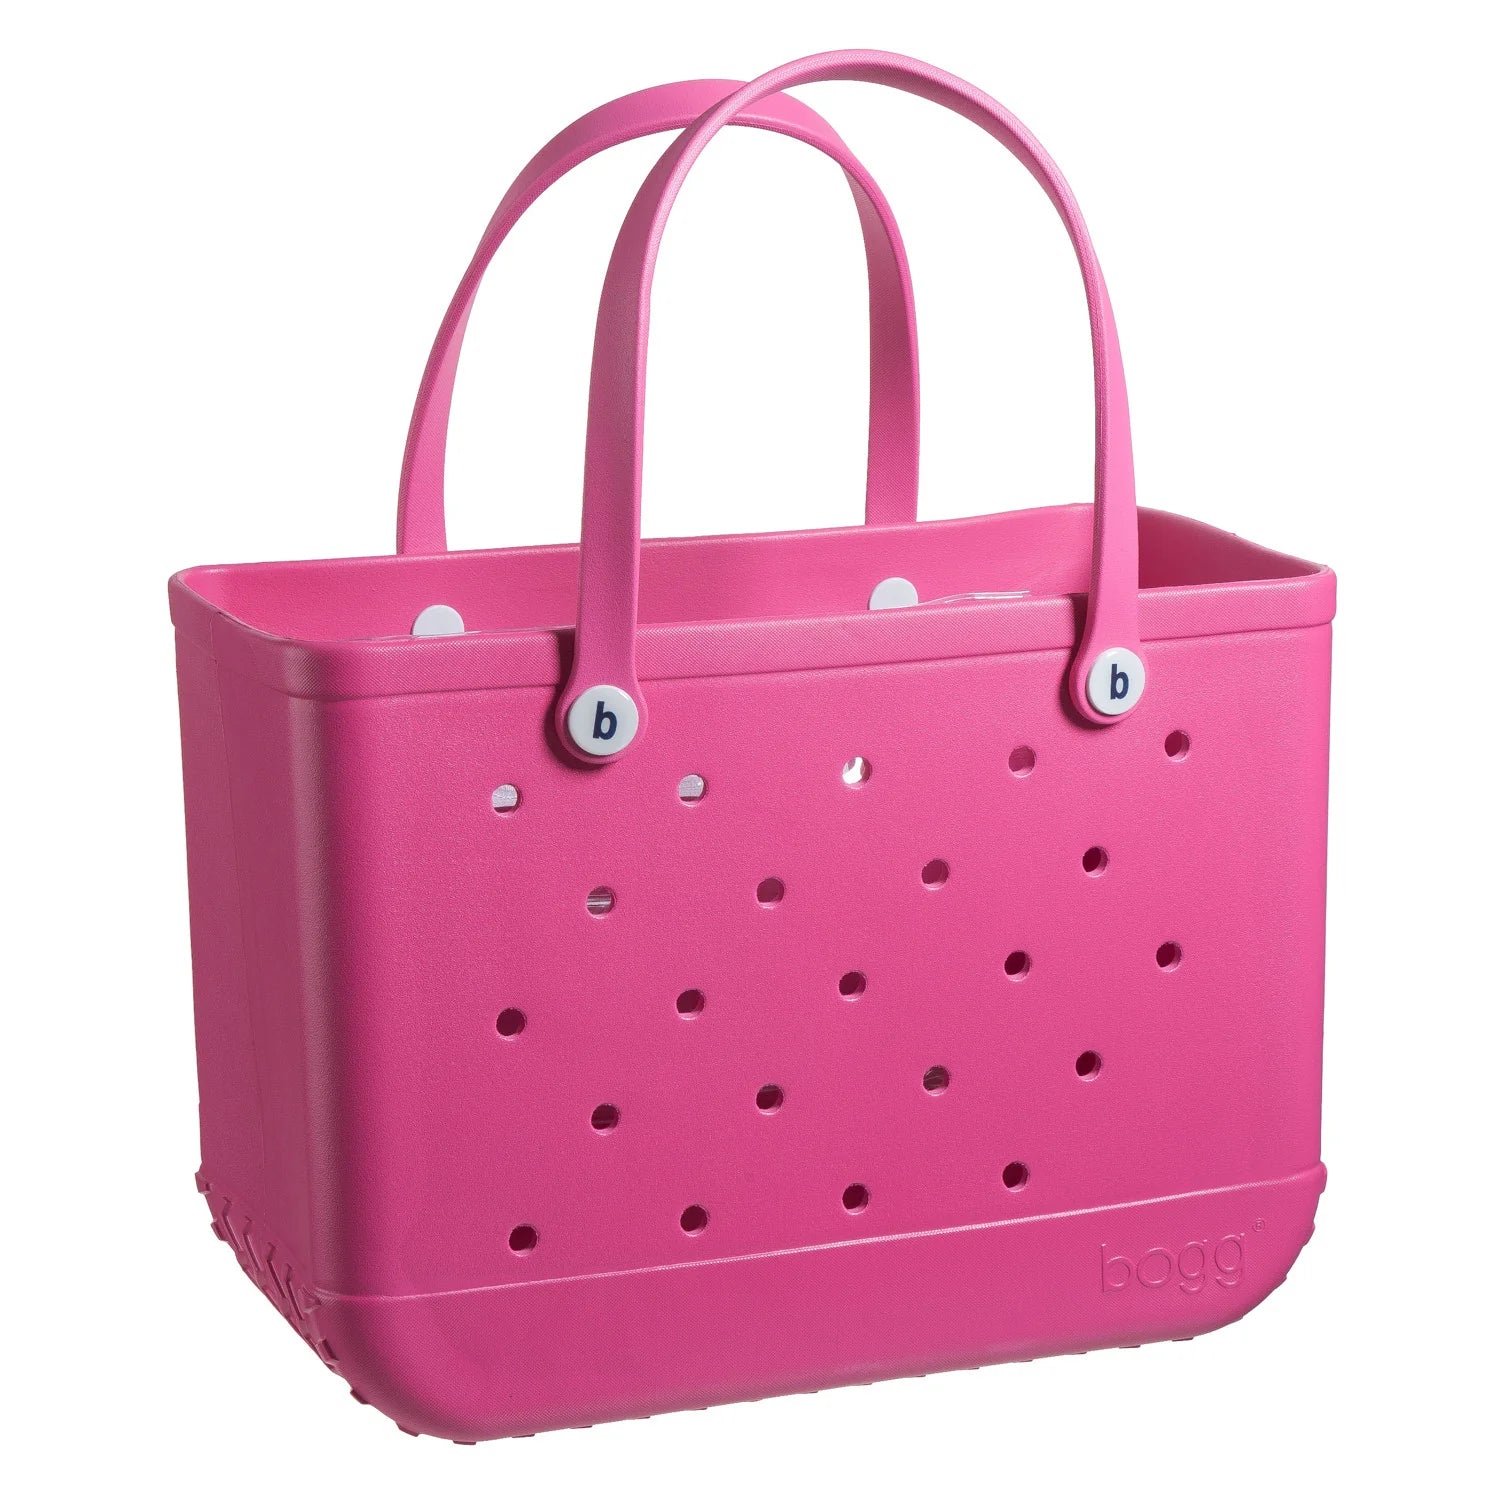 Bogg Bag Original Bogg Haute Pink